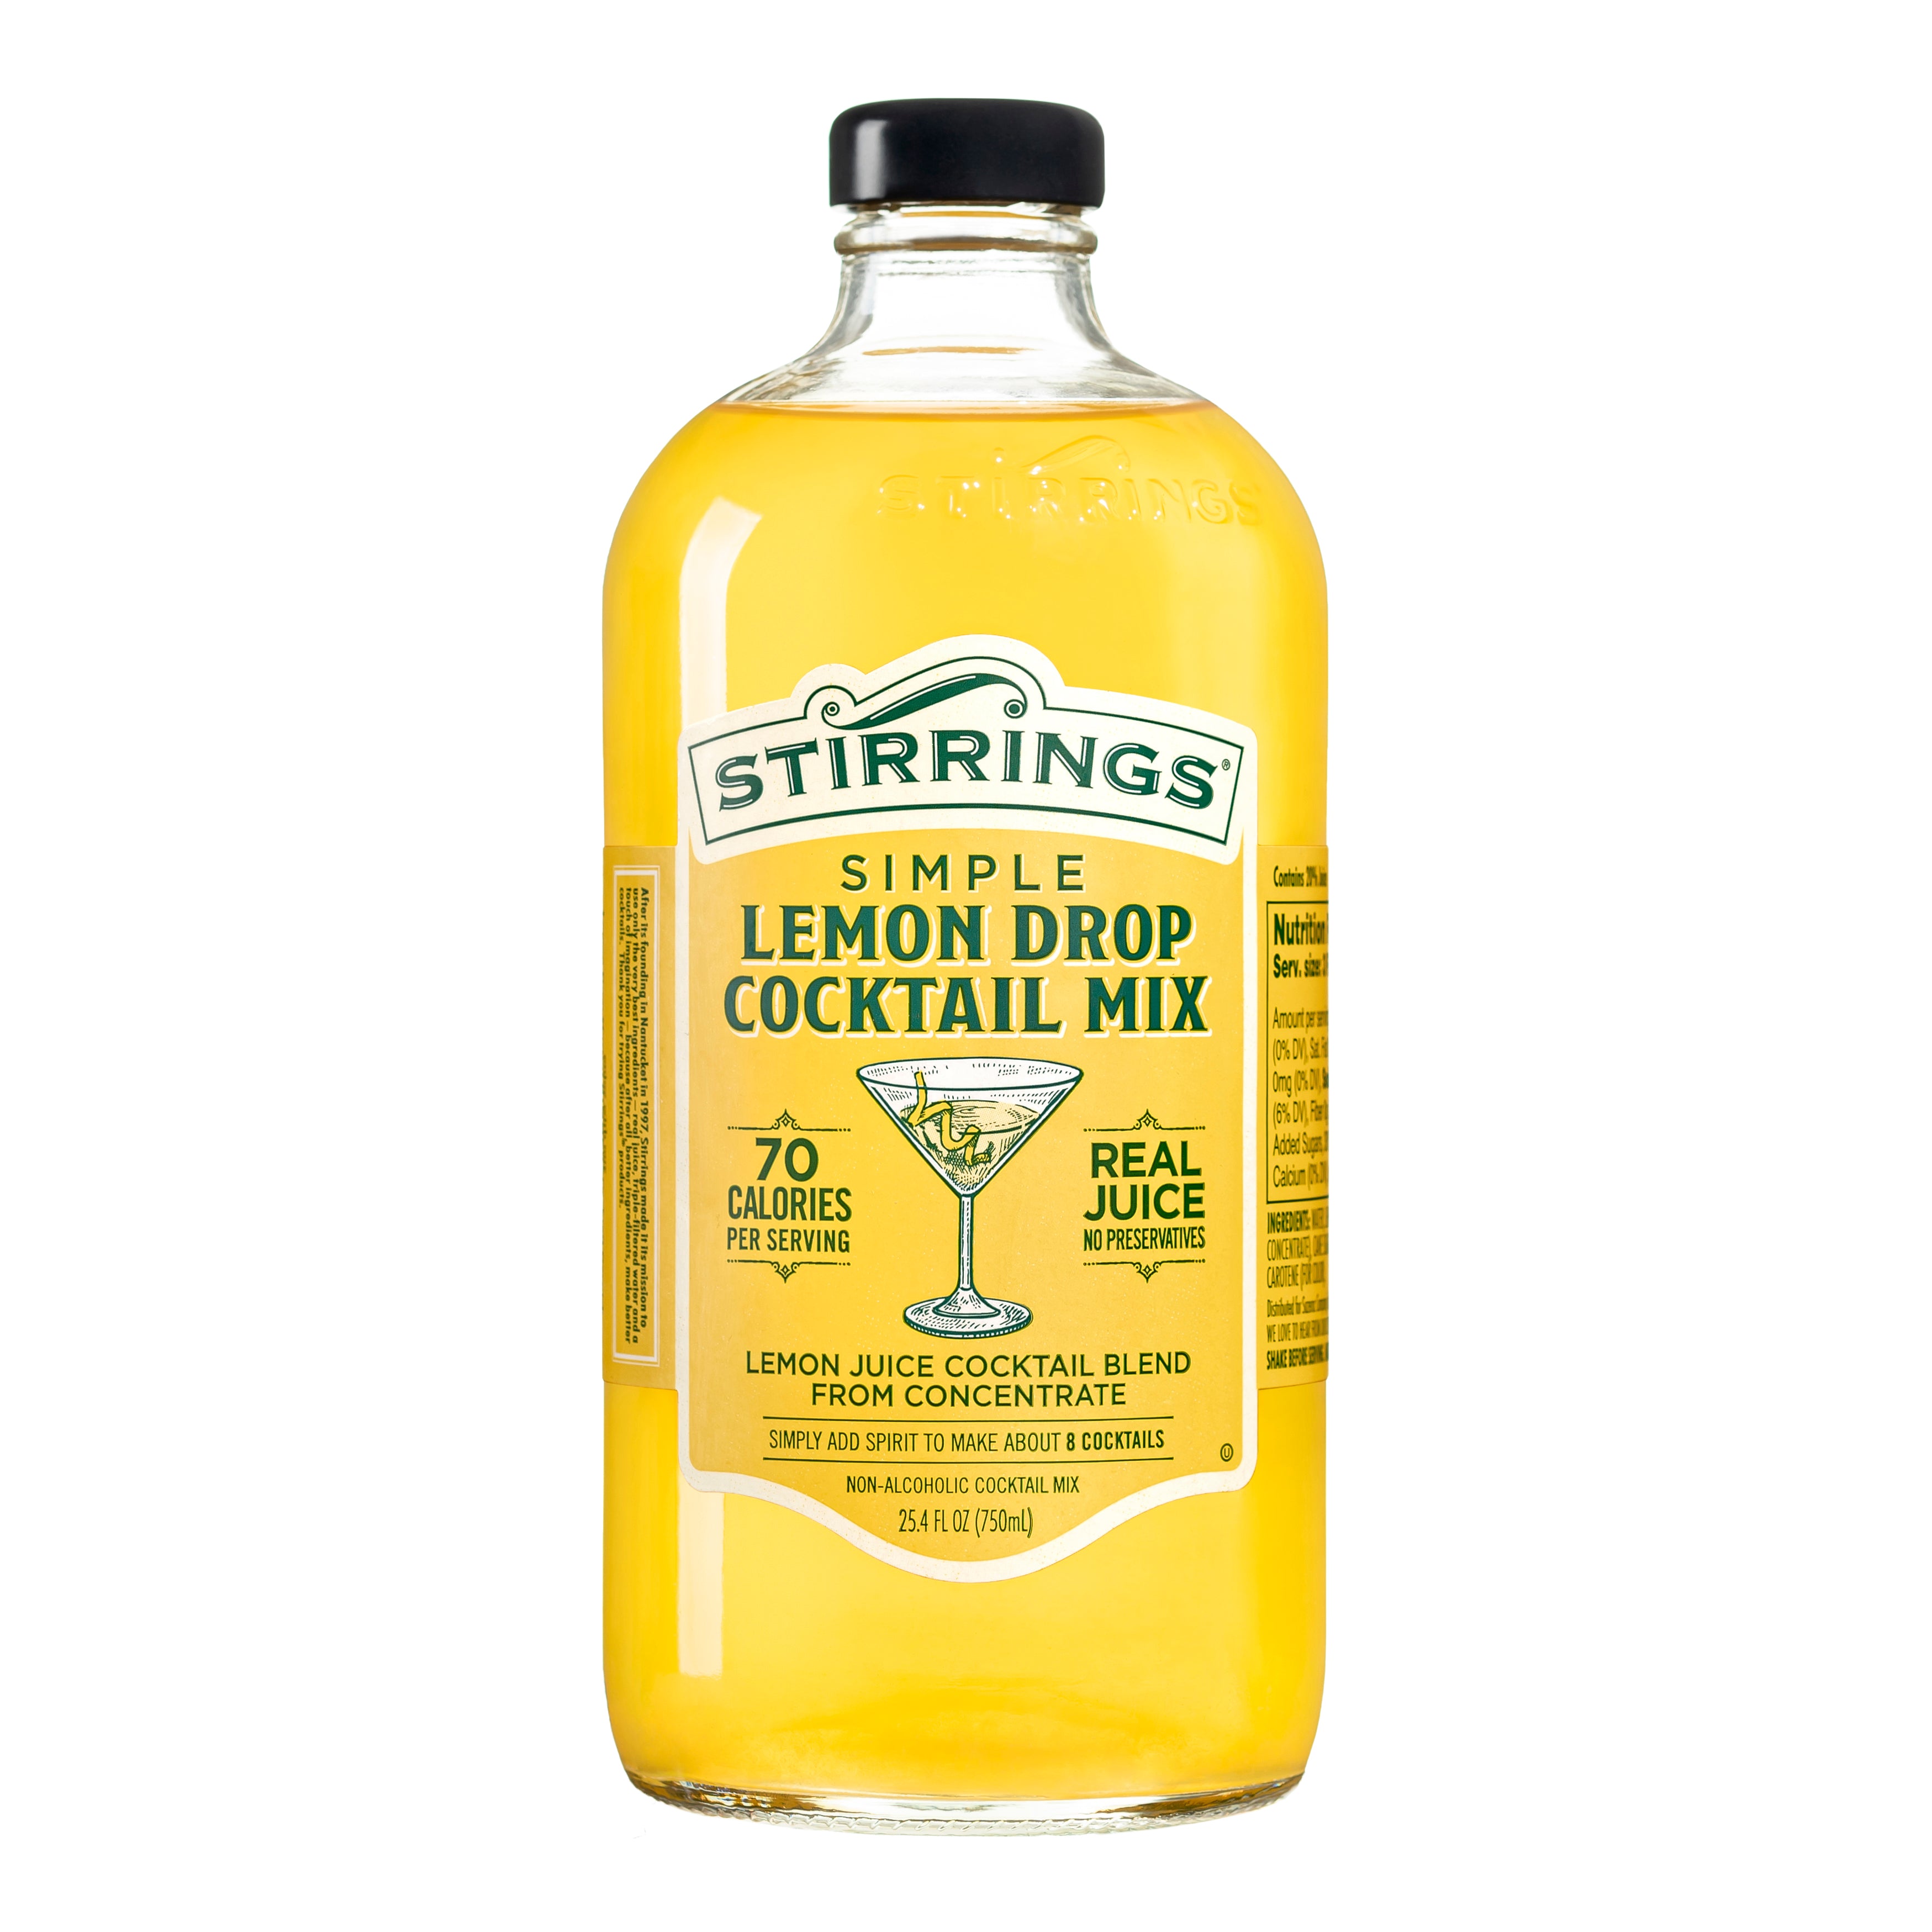 Stirrings Cocktail Mix, Non-Alcoholic, Simple Lemon Drop Martini - 25.4 fl oz